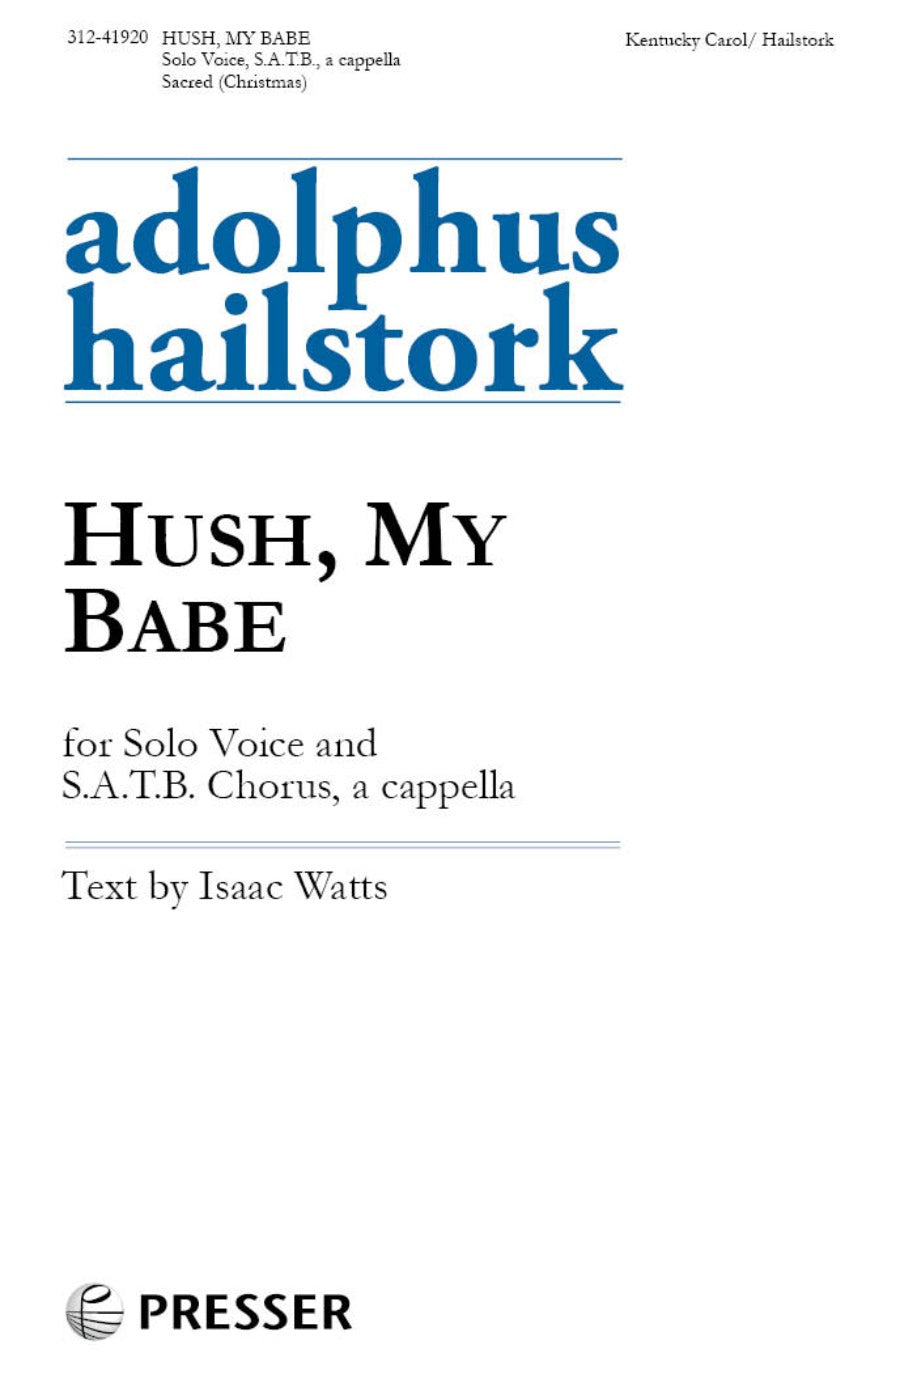 Hailstork: Hush, My Babe